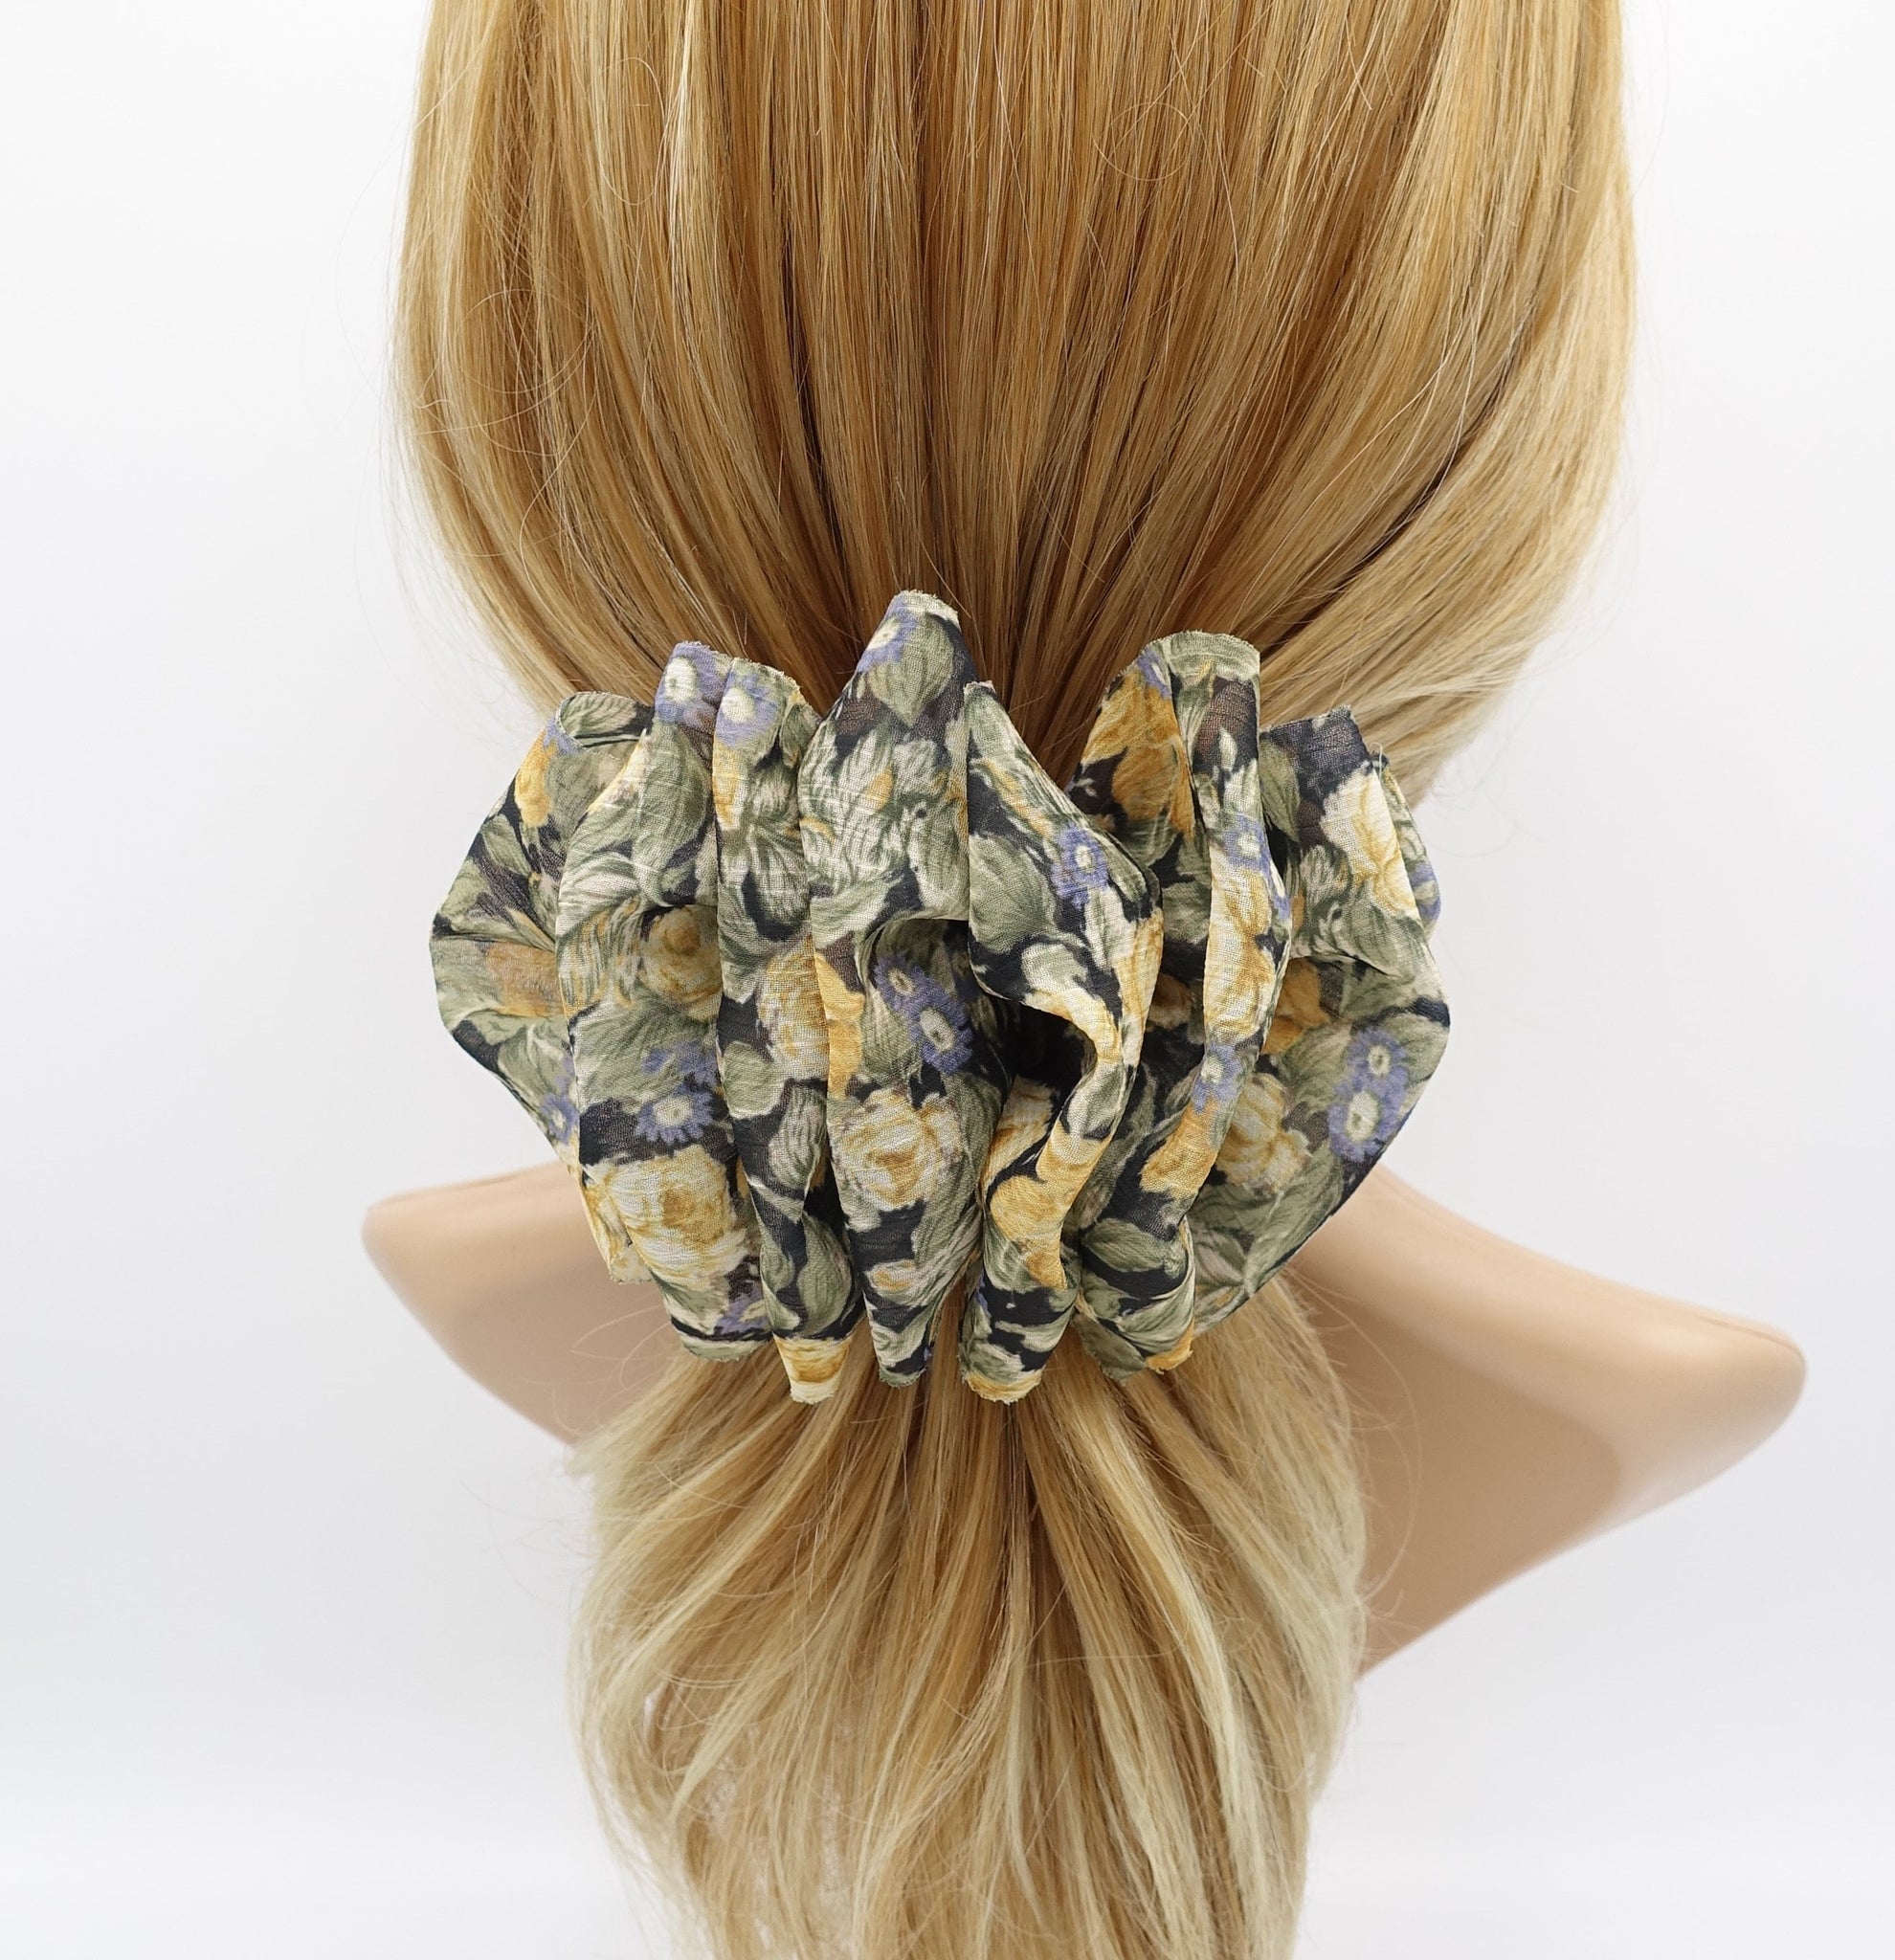 veryshine.com Barrette (Bow) Navy florl chiffon ruffle flower hair barrette woman hair accessory